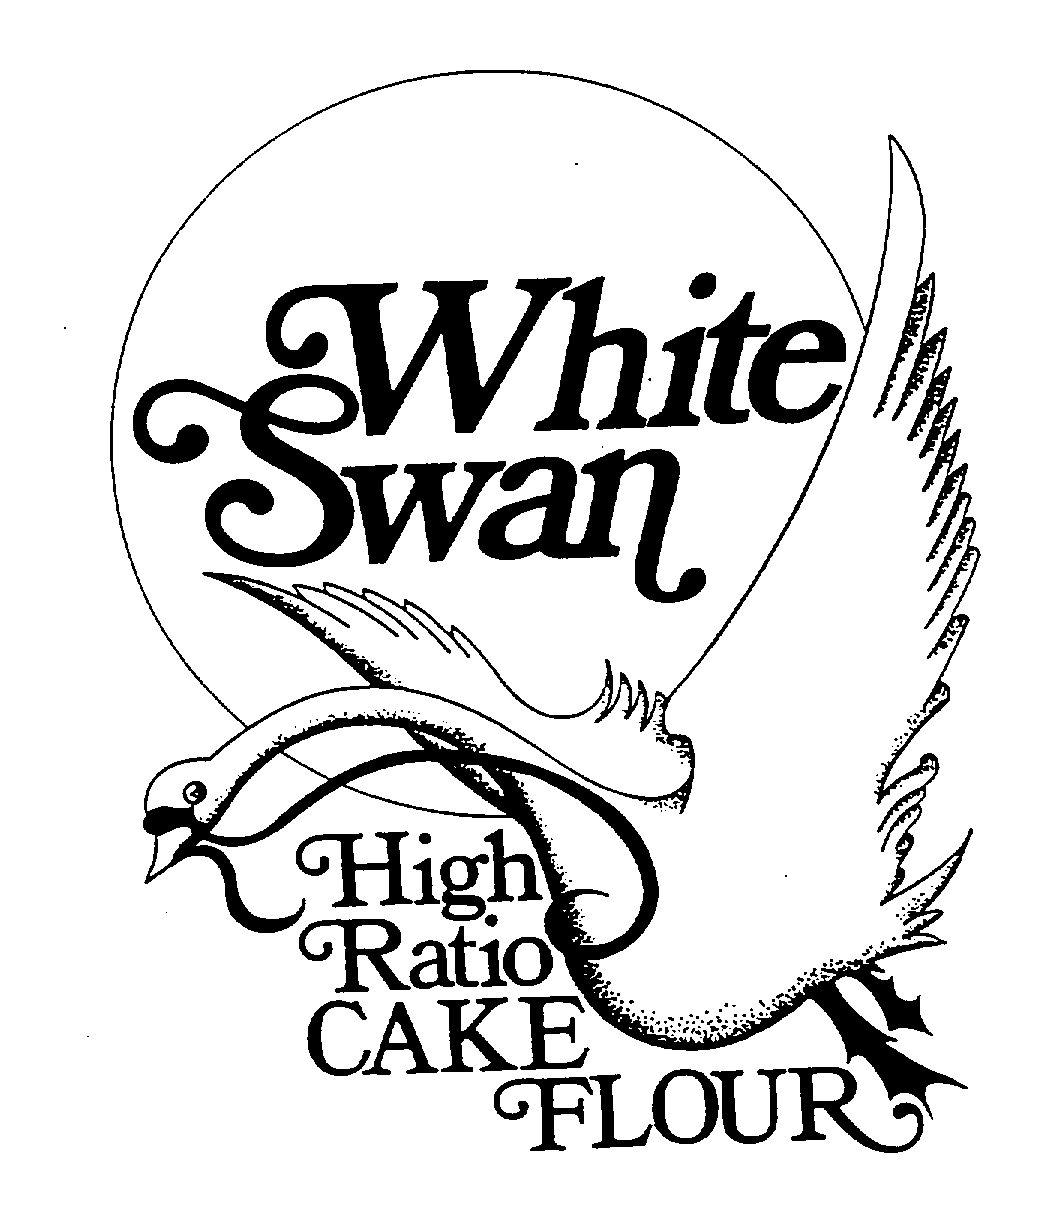  WHITE SWAN HIGH RATIO CAKE FLOUR